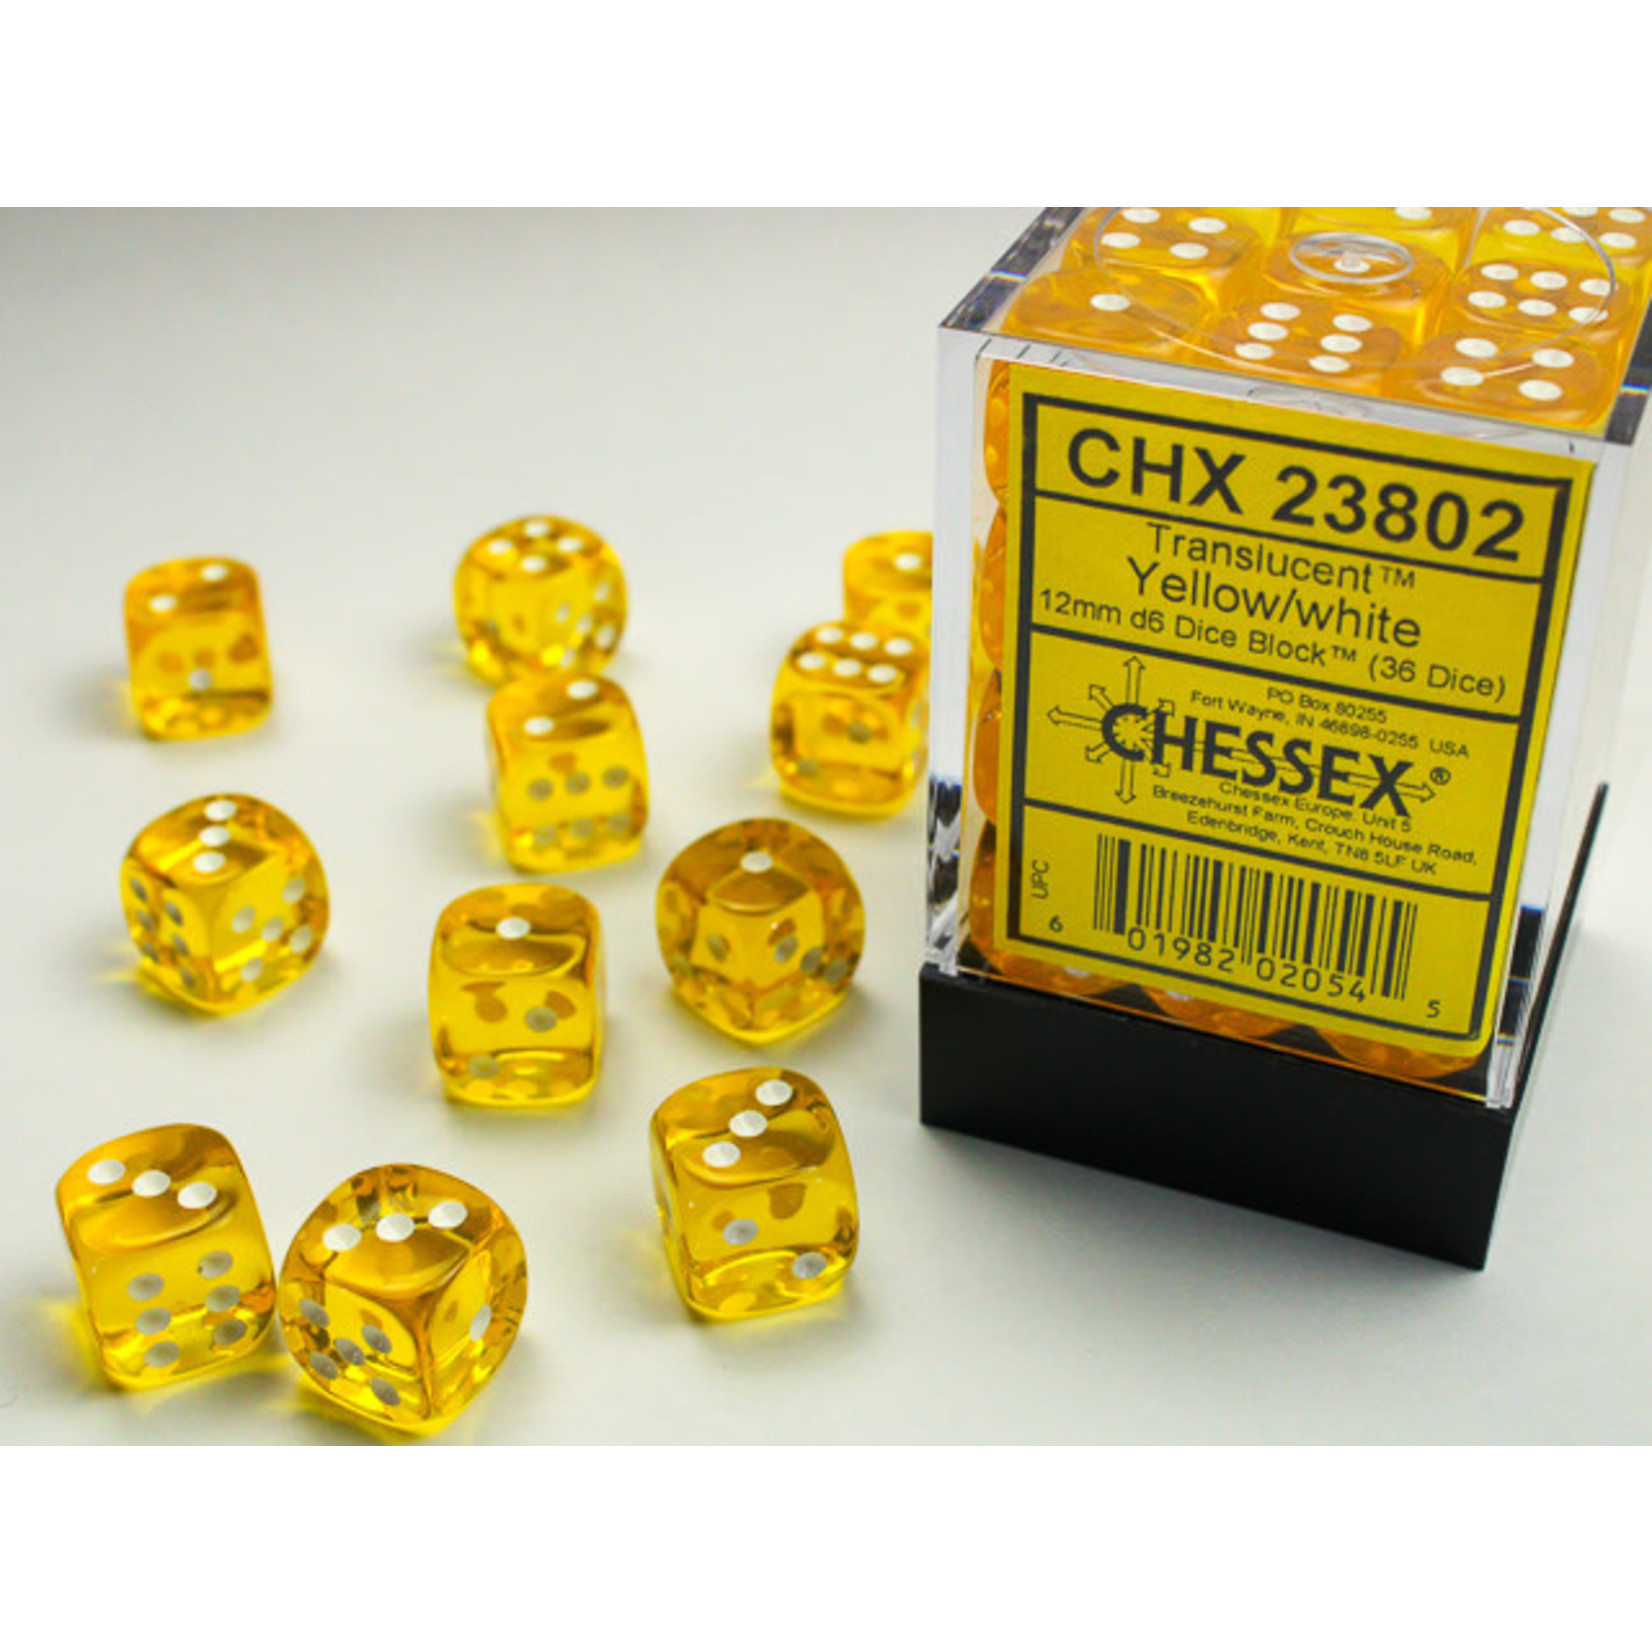 Chessex 23802 Translucent 36pc Yellow/White Dice